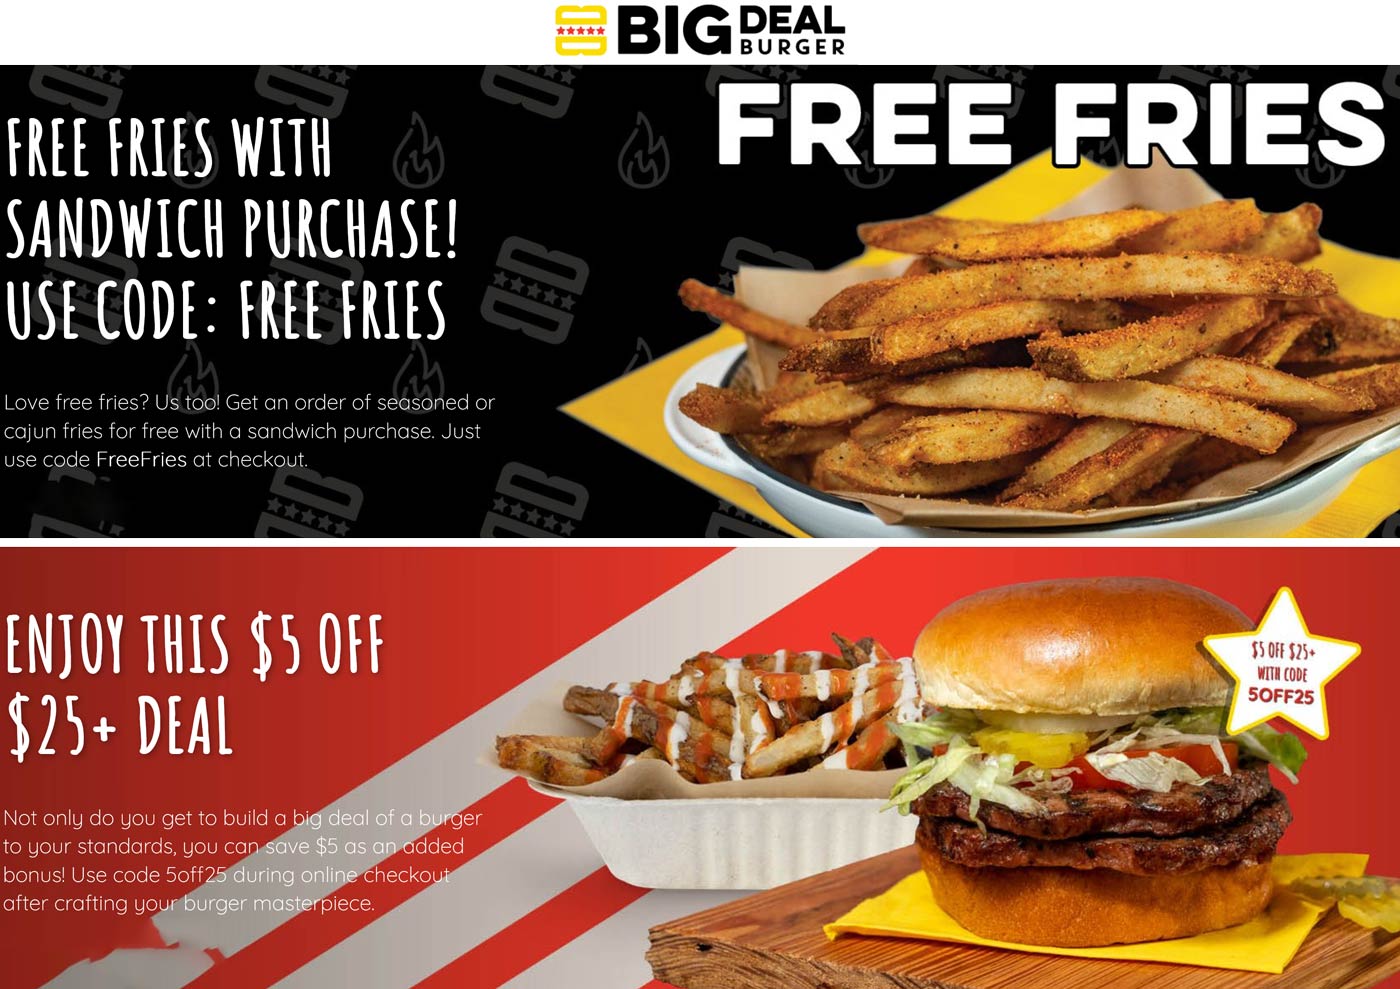 Big Deal Burger restaurants Coupon  Free fries with your sandwich today at Big Deal Burger via promo code FreeFries #bigdealburger 